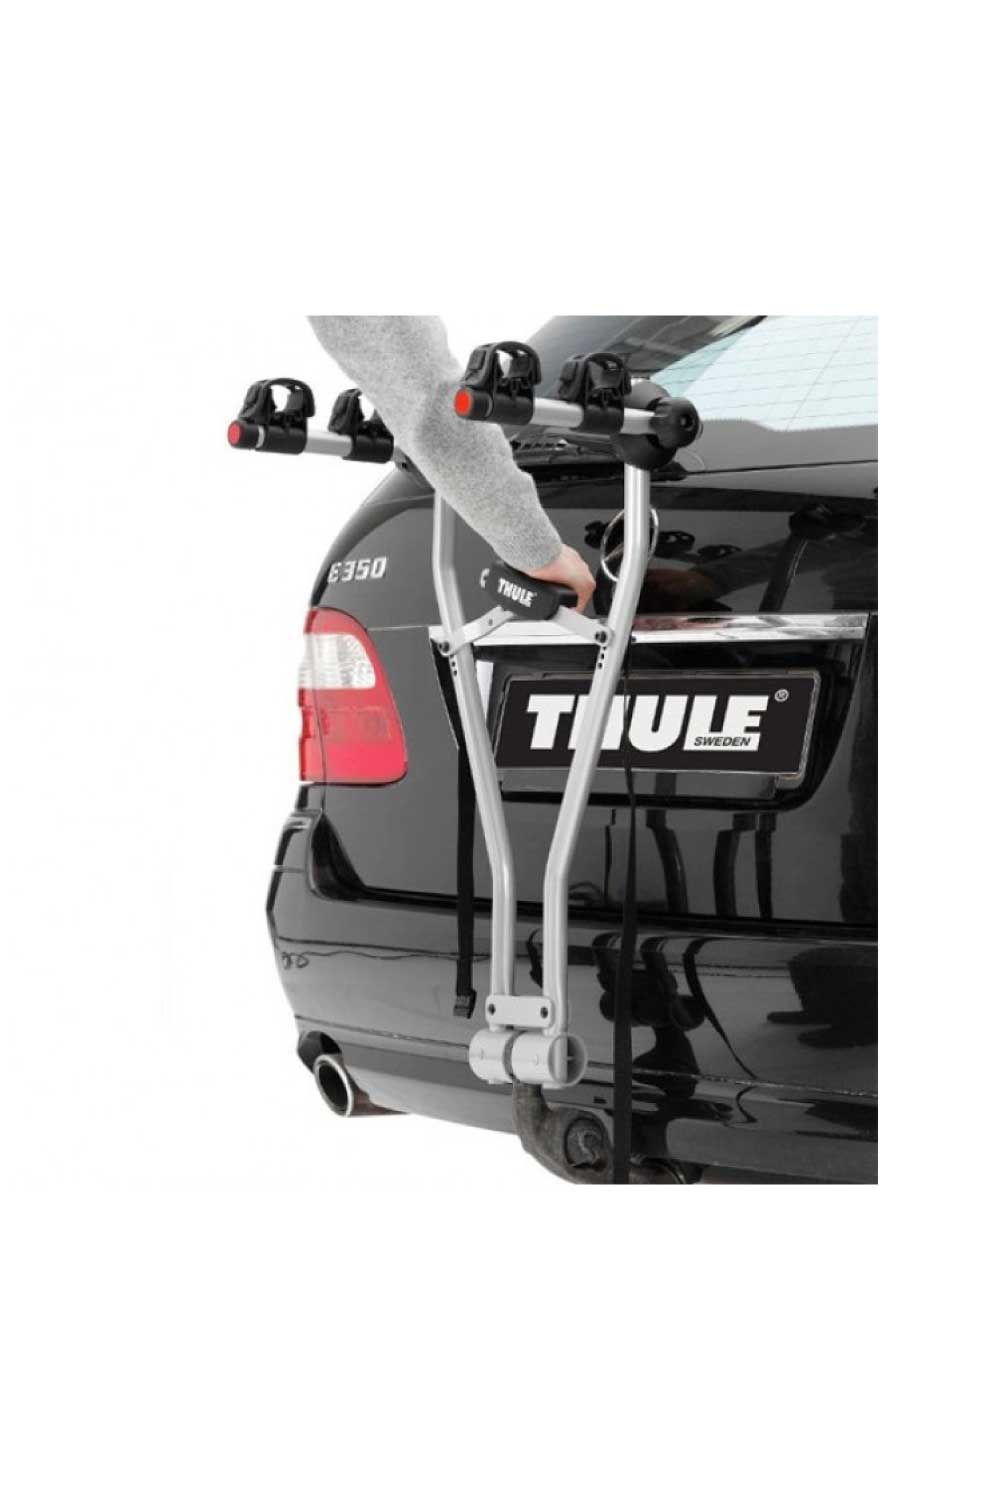 thule xpress pro 970 towbar mounted bike rack